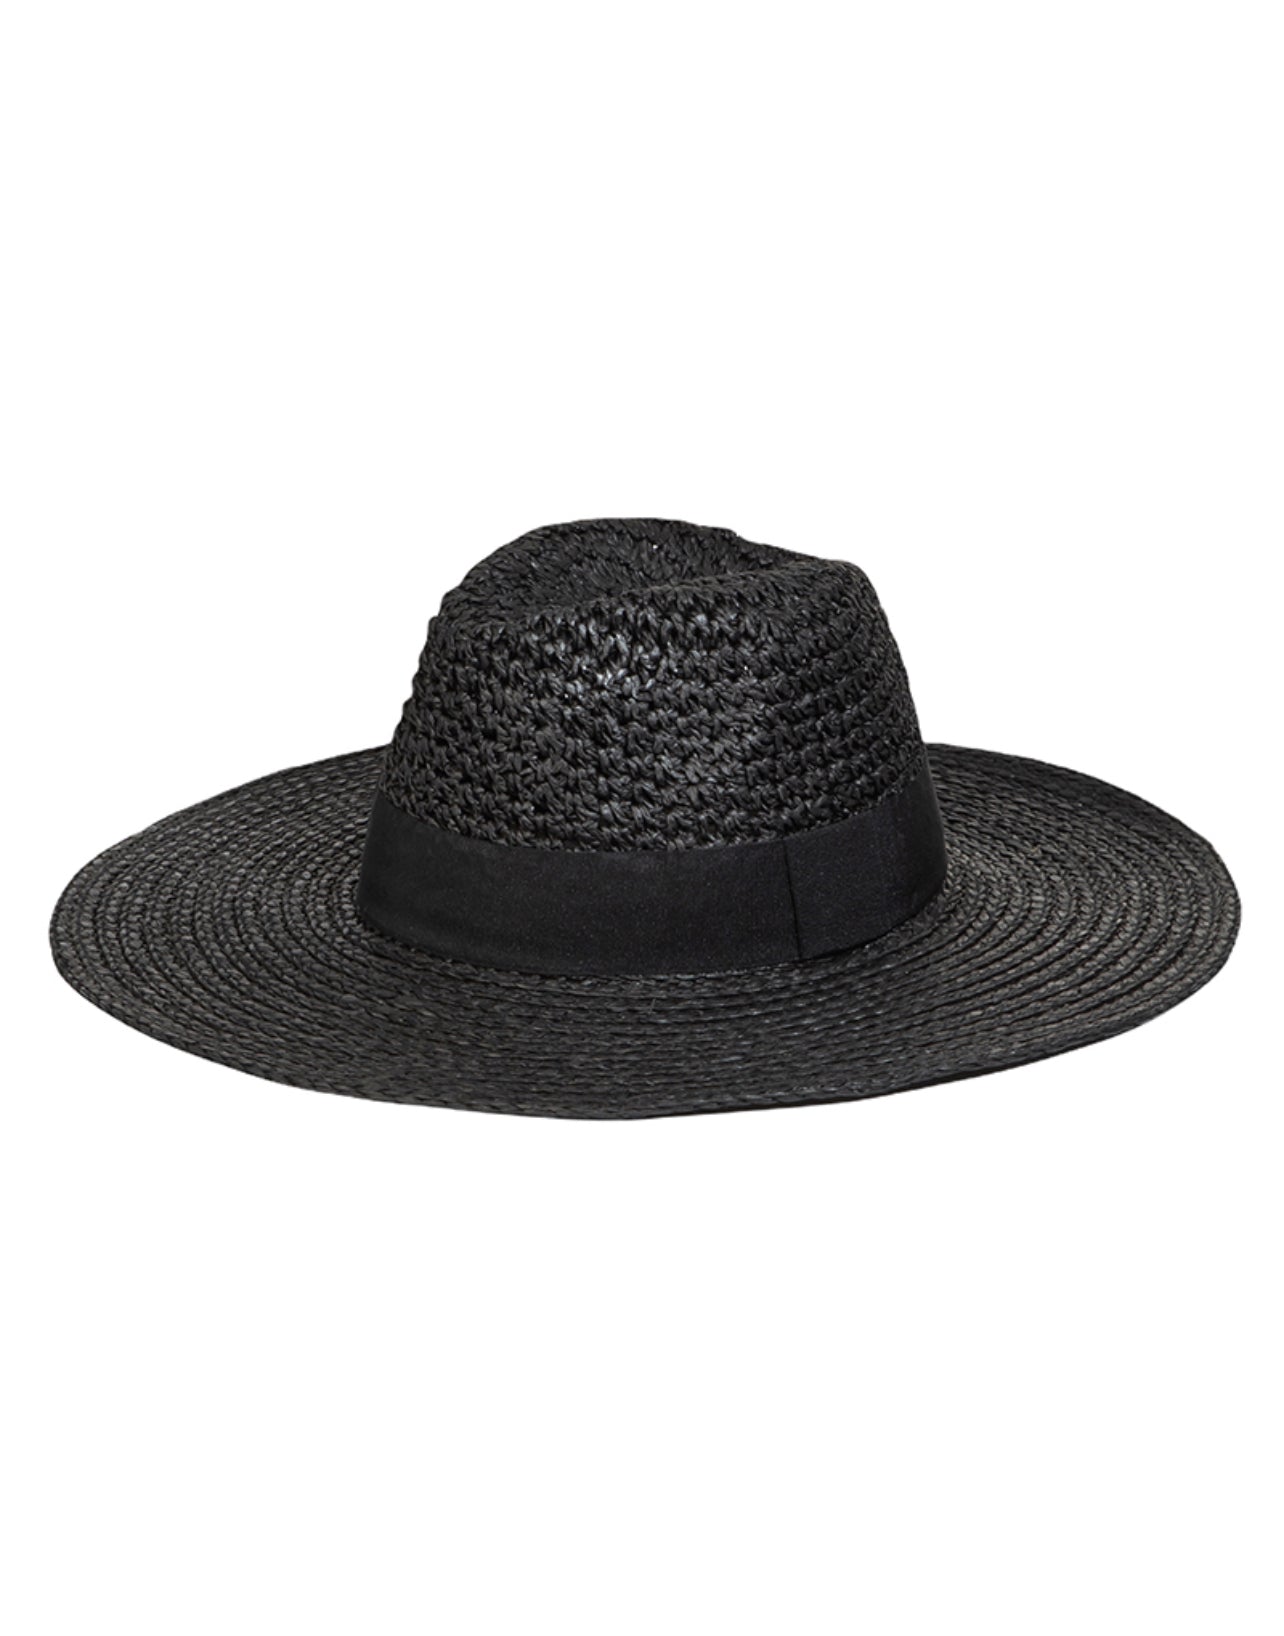 Monochrome Banded Straw Sun Hat